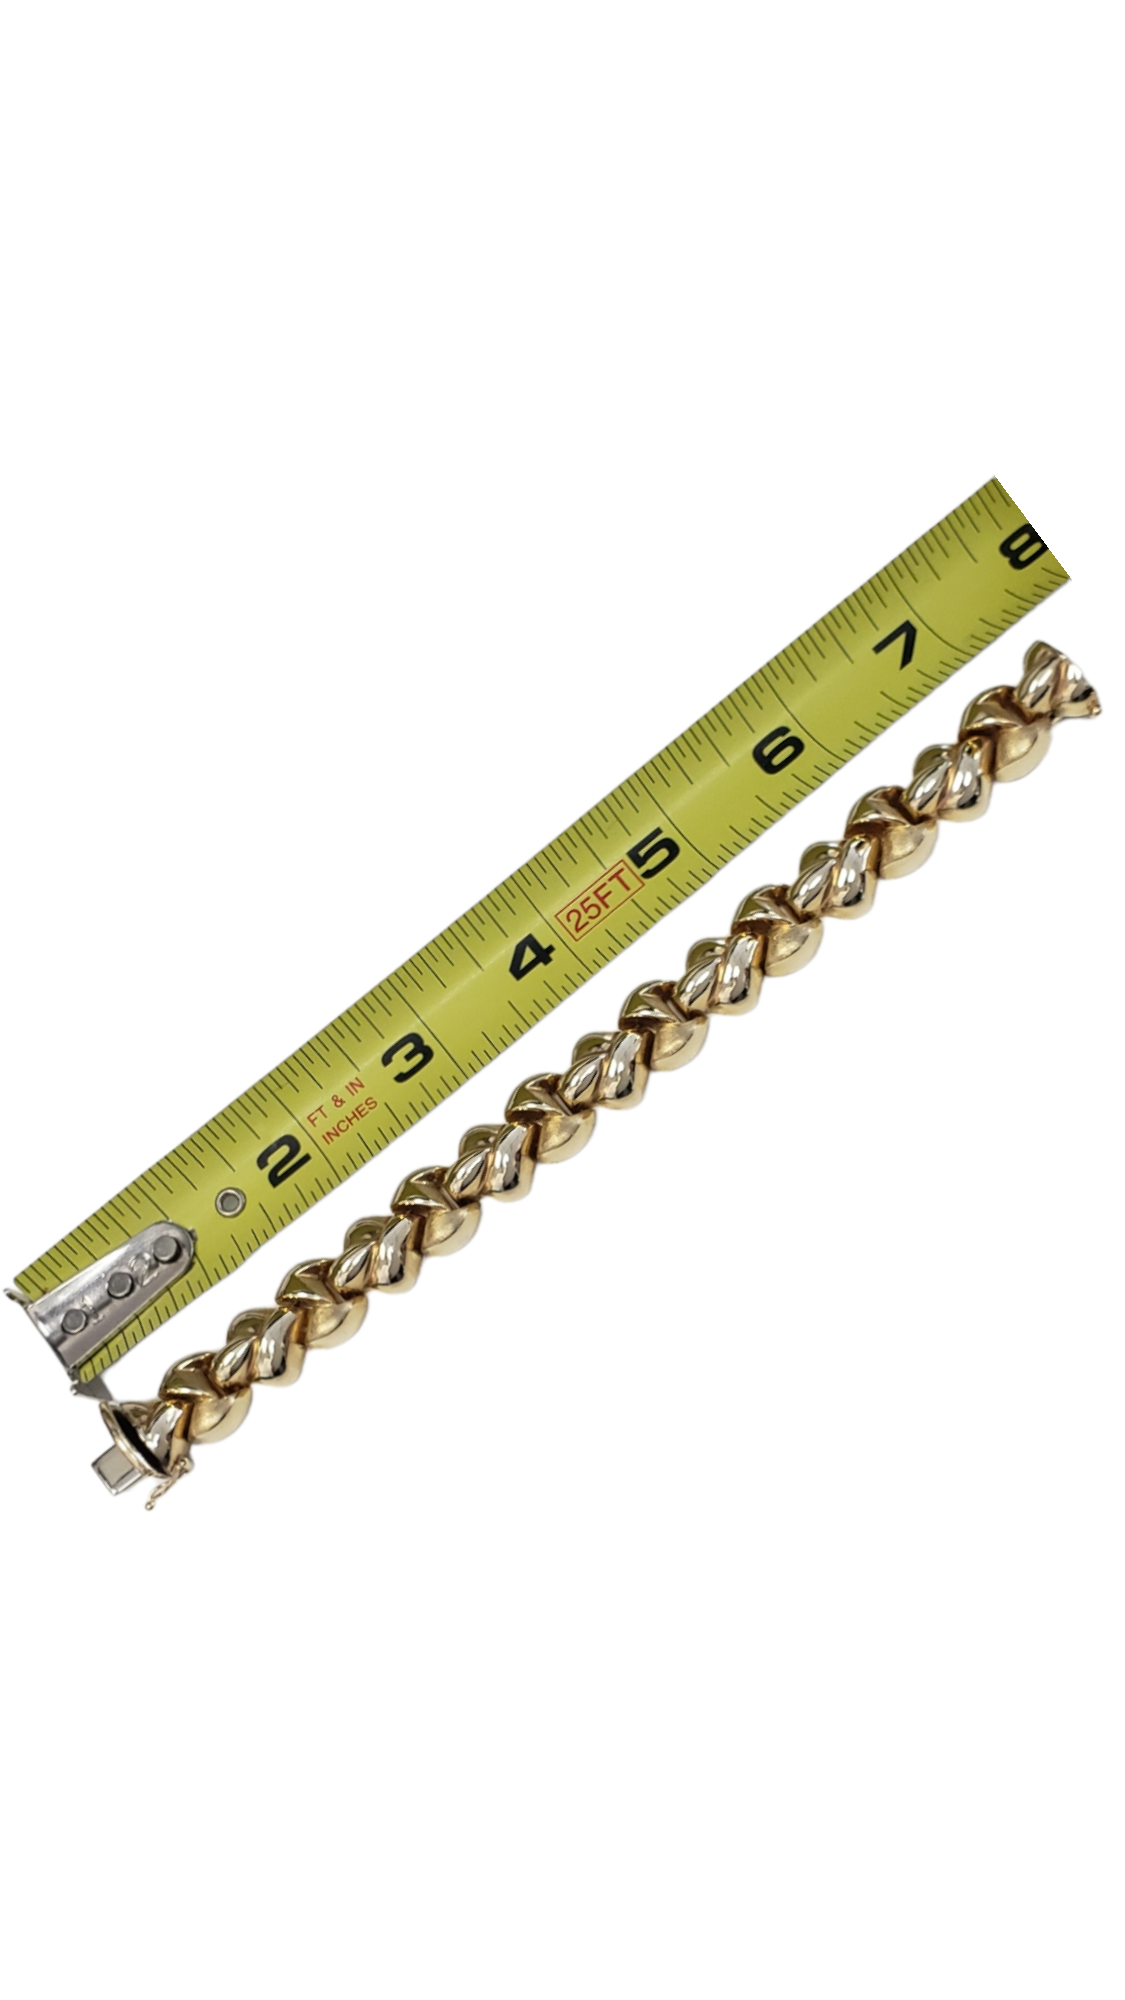 Fancy Knot Link Style Bracelet made in 14-Karat Yellow Gold w/ figure eight safety latch